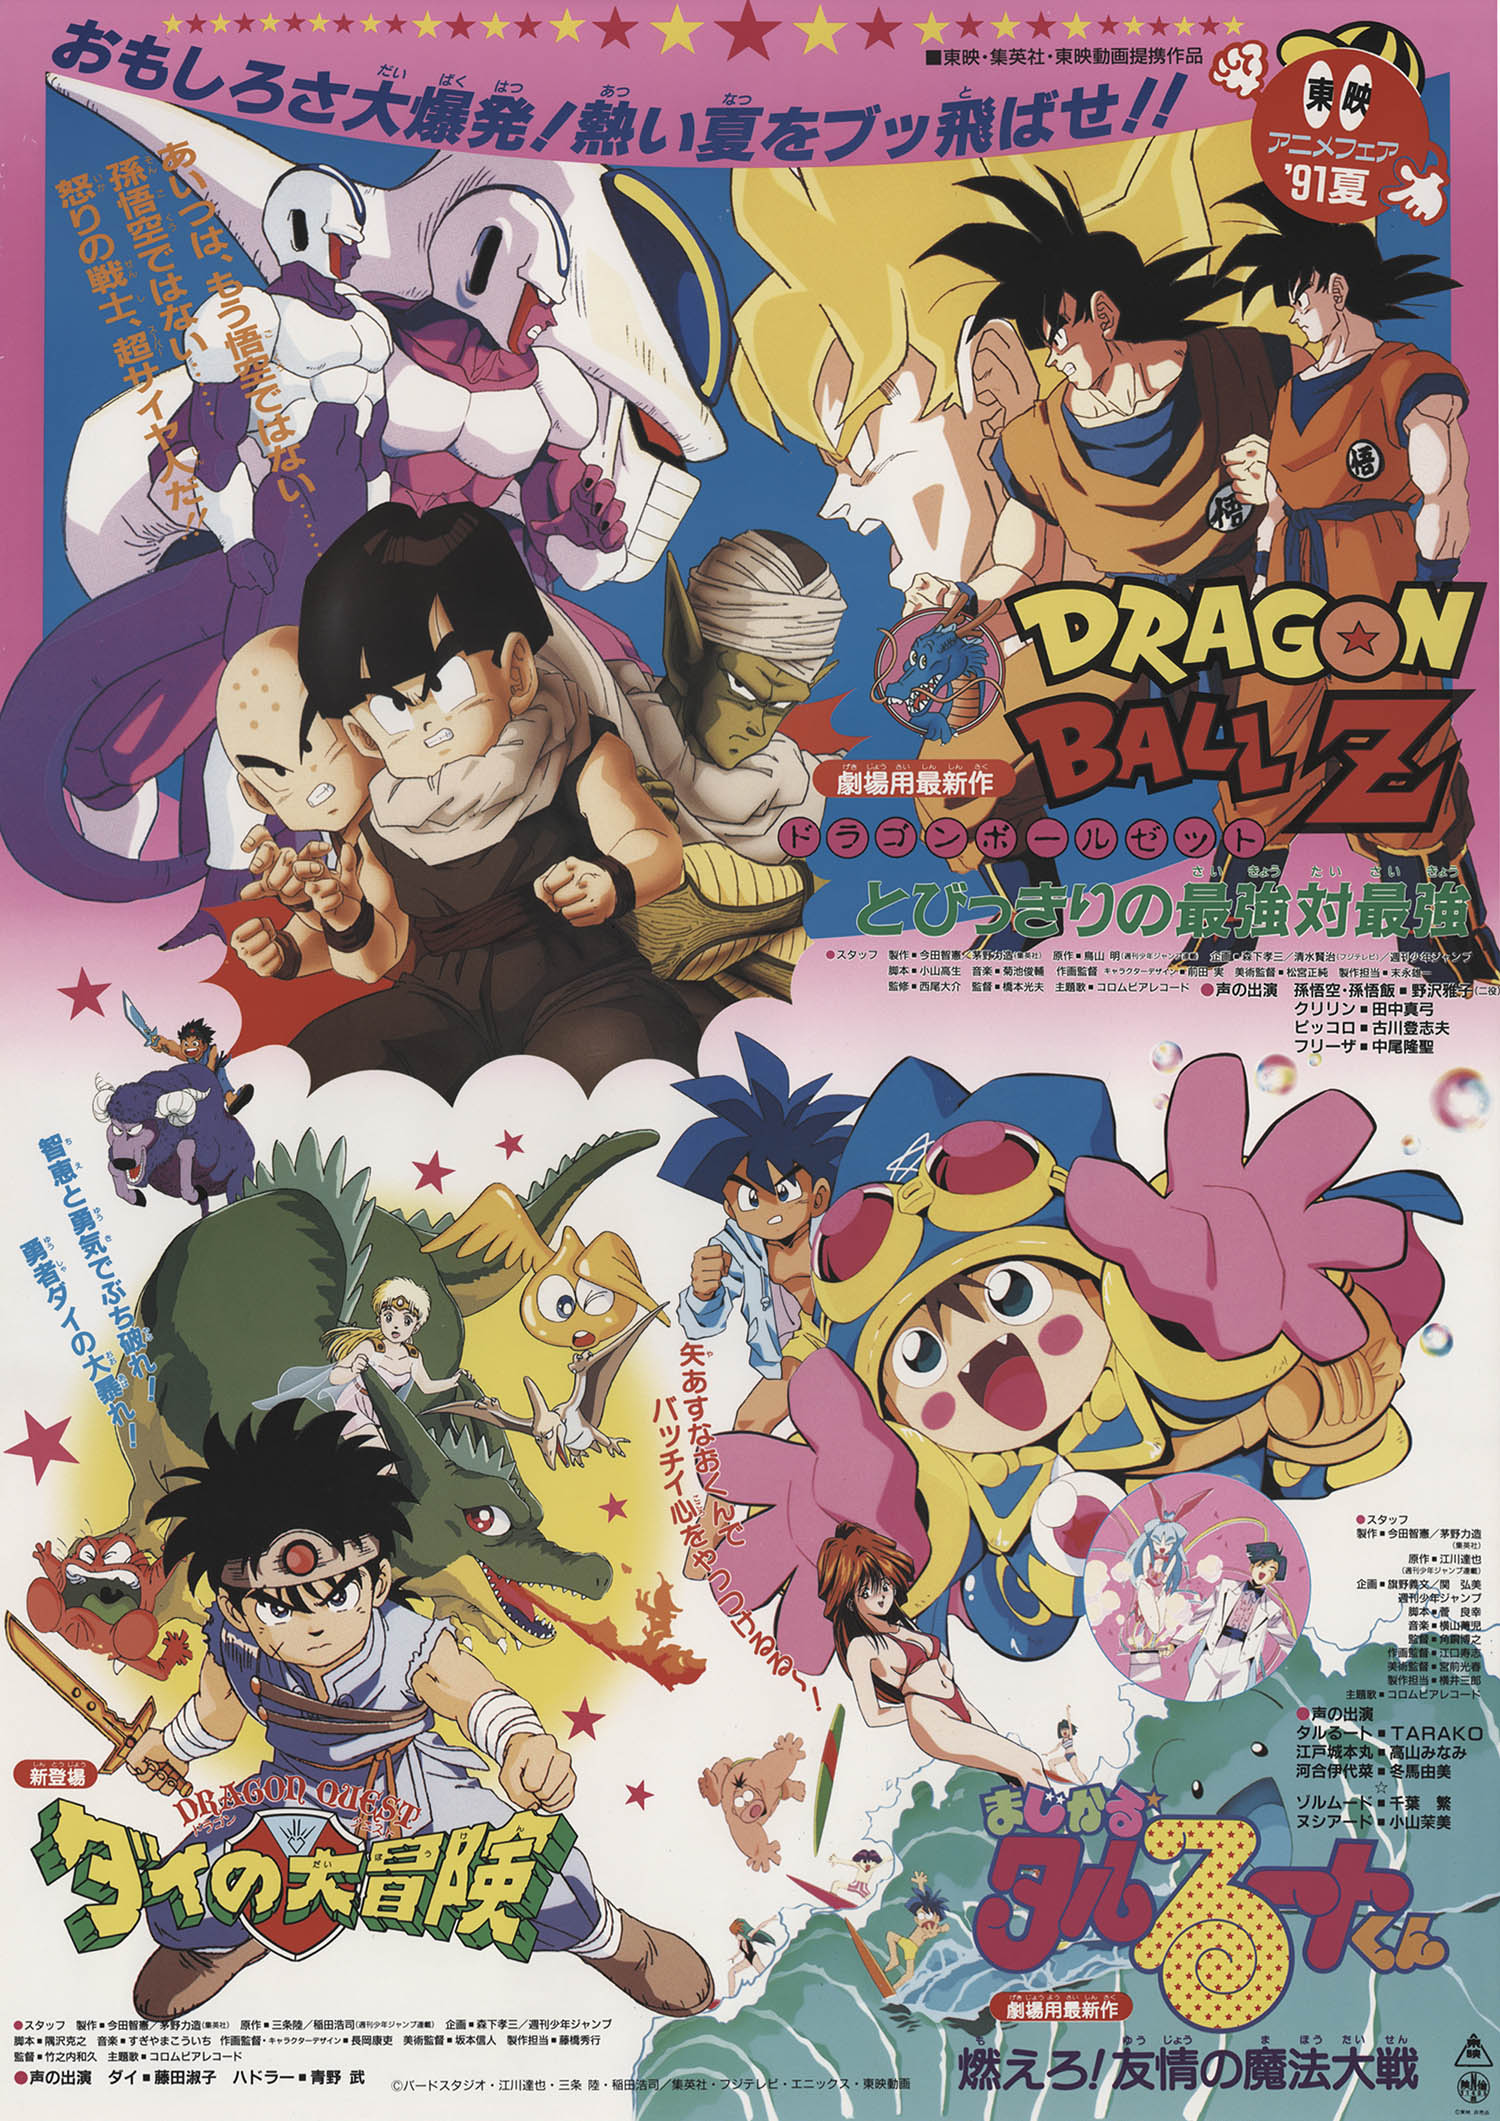 Anime Fair 91 Summer Poster